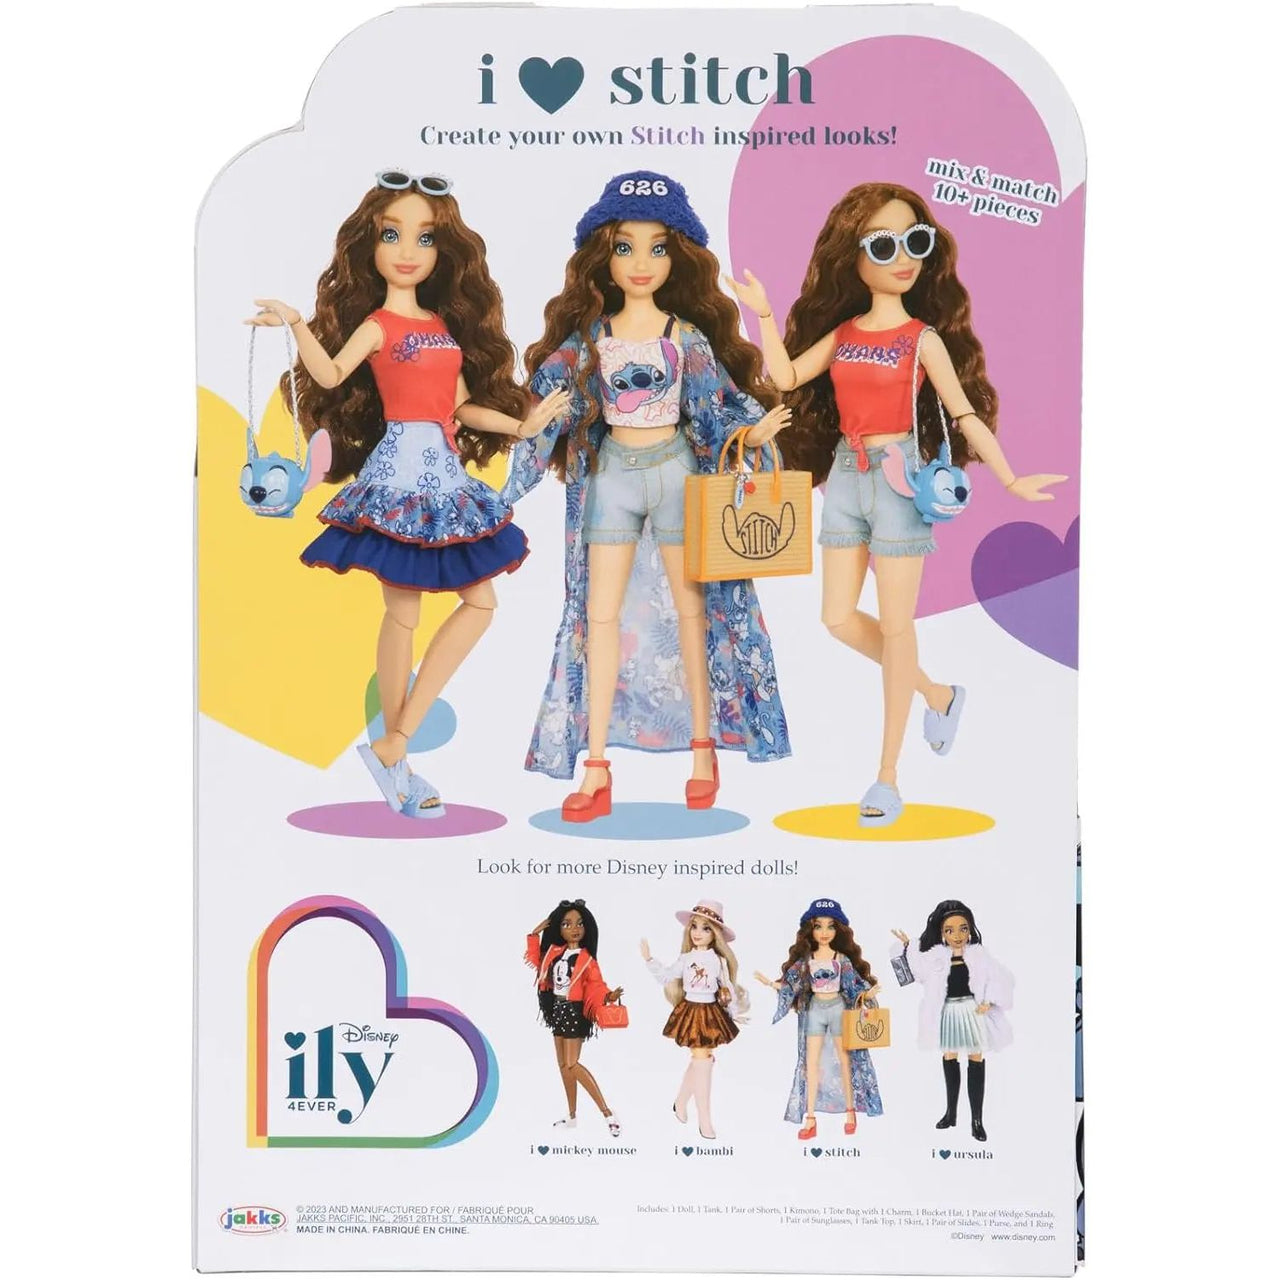 Disney ily 4ever Stitch Fashion Doll Disney